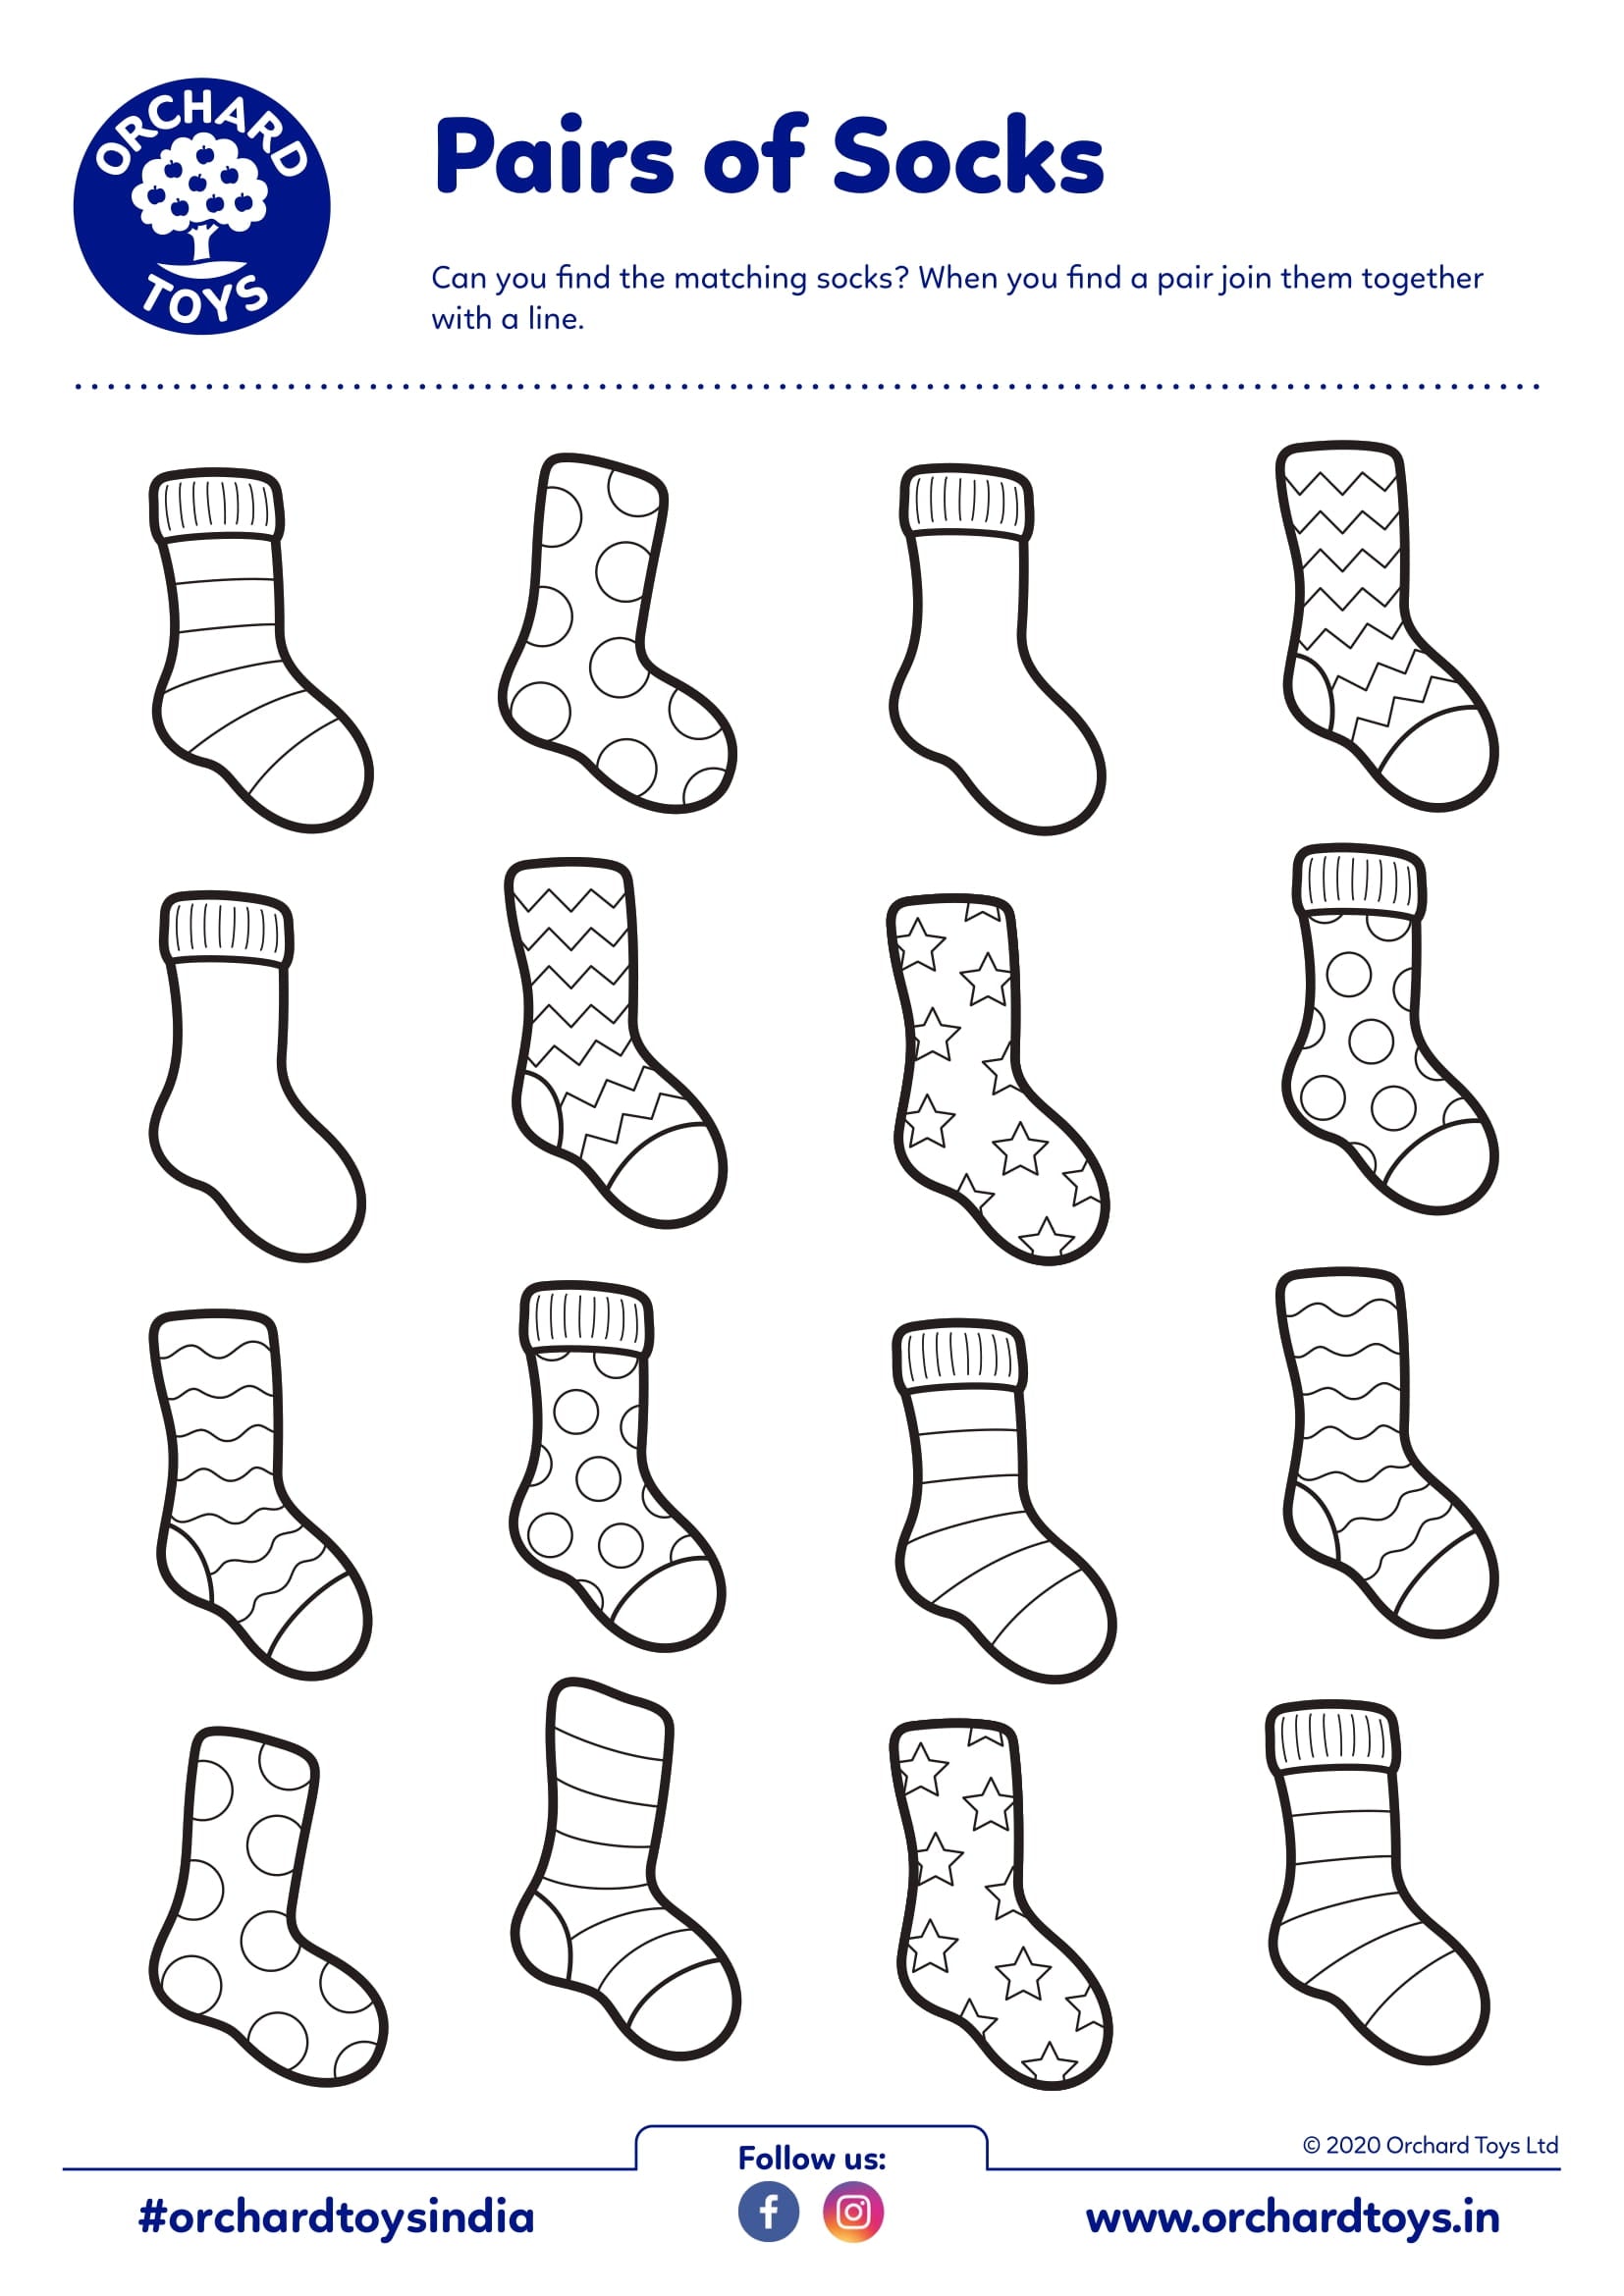 Pair of Socks Activity Sheet